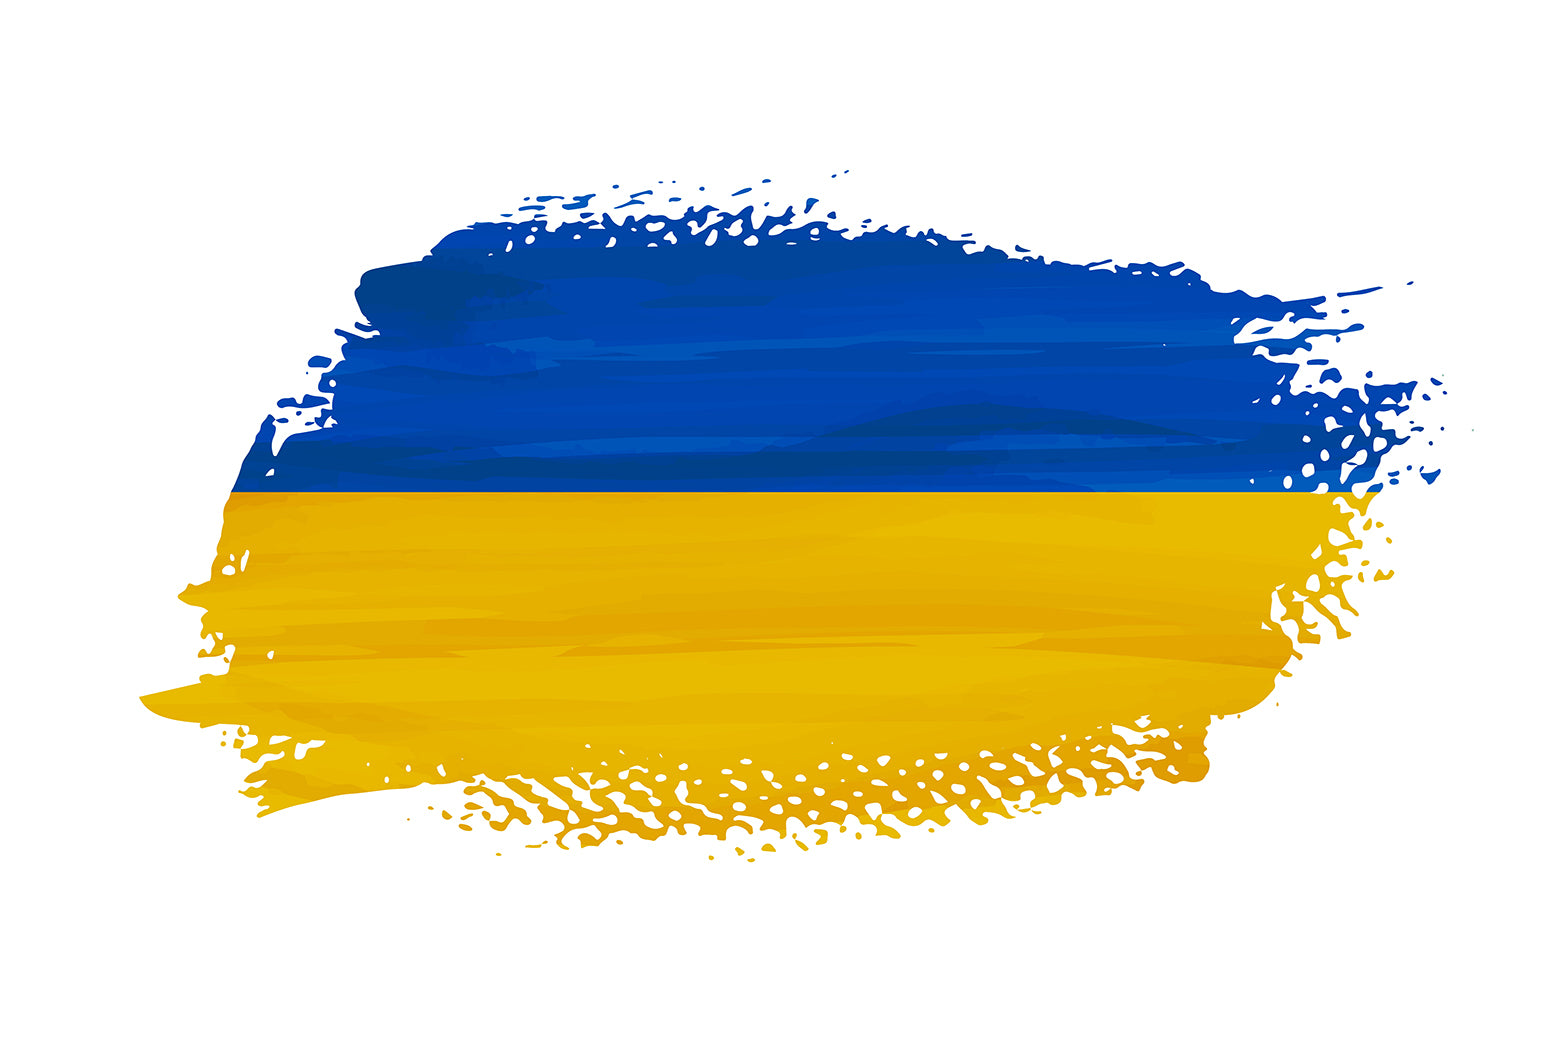 Ukraine Humanitarian Crisis Appeal